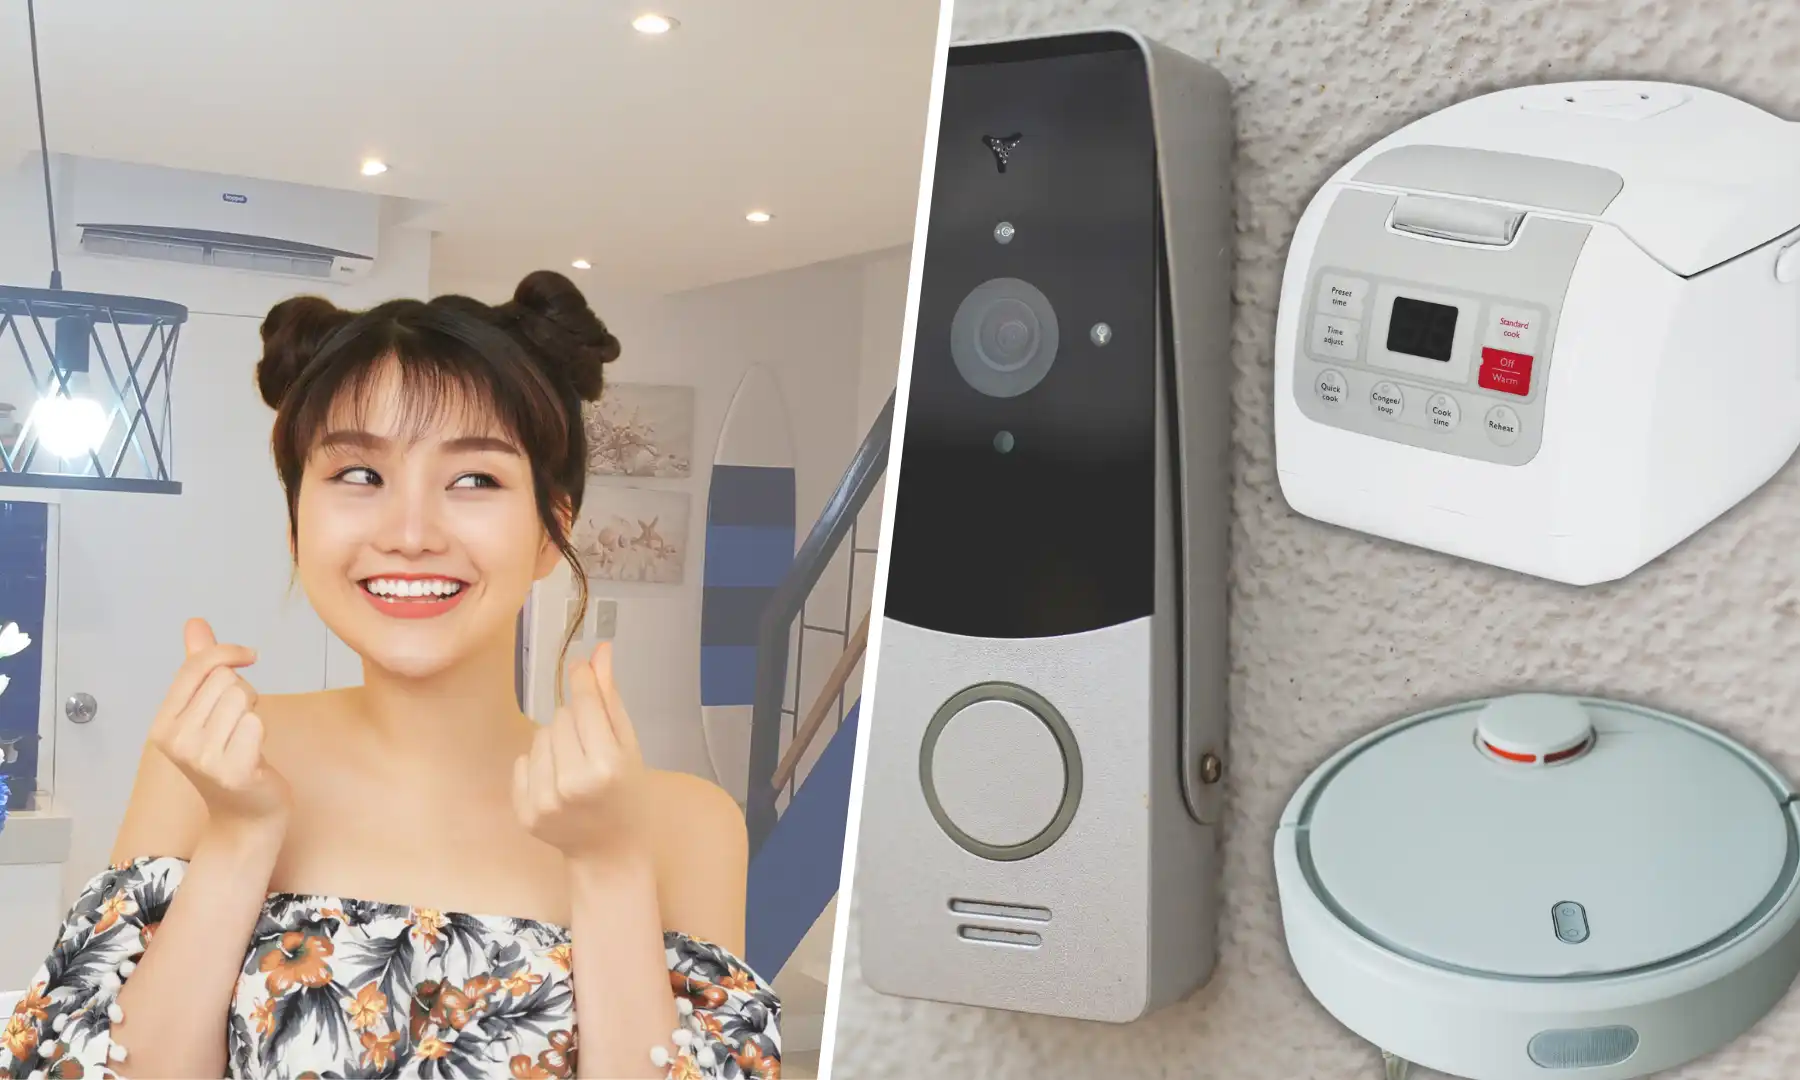 Asian house wives' gadgets: cool gadgets/smart home appliances